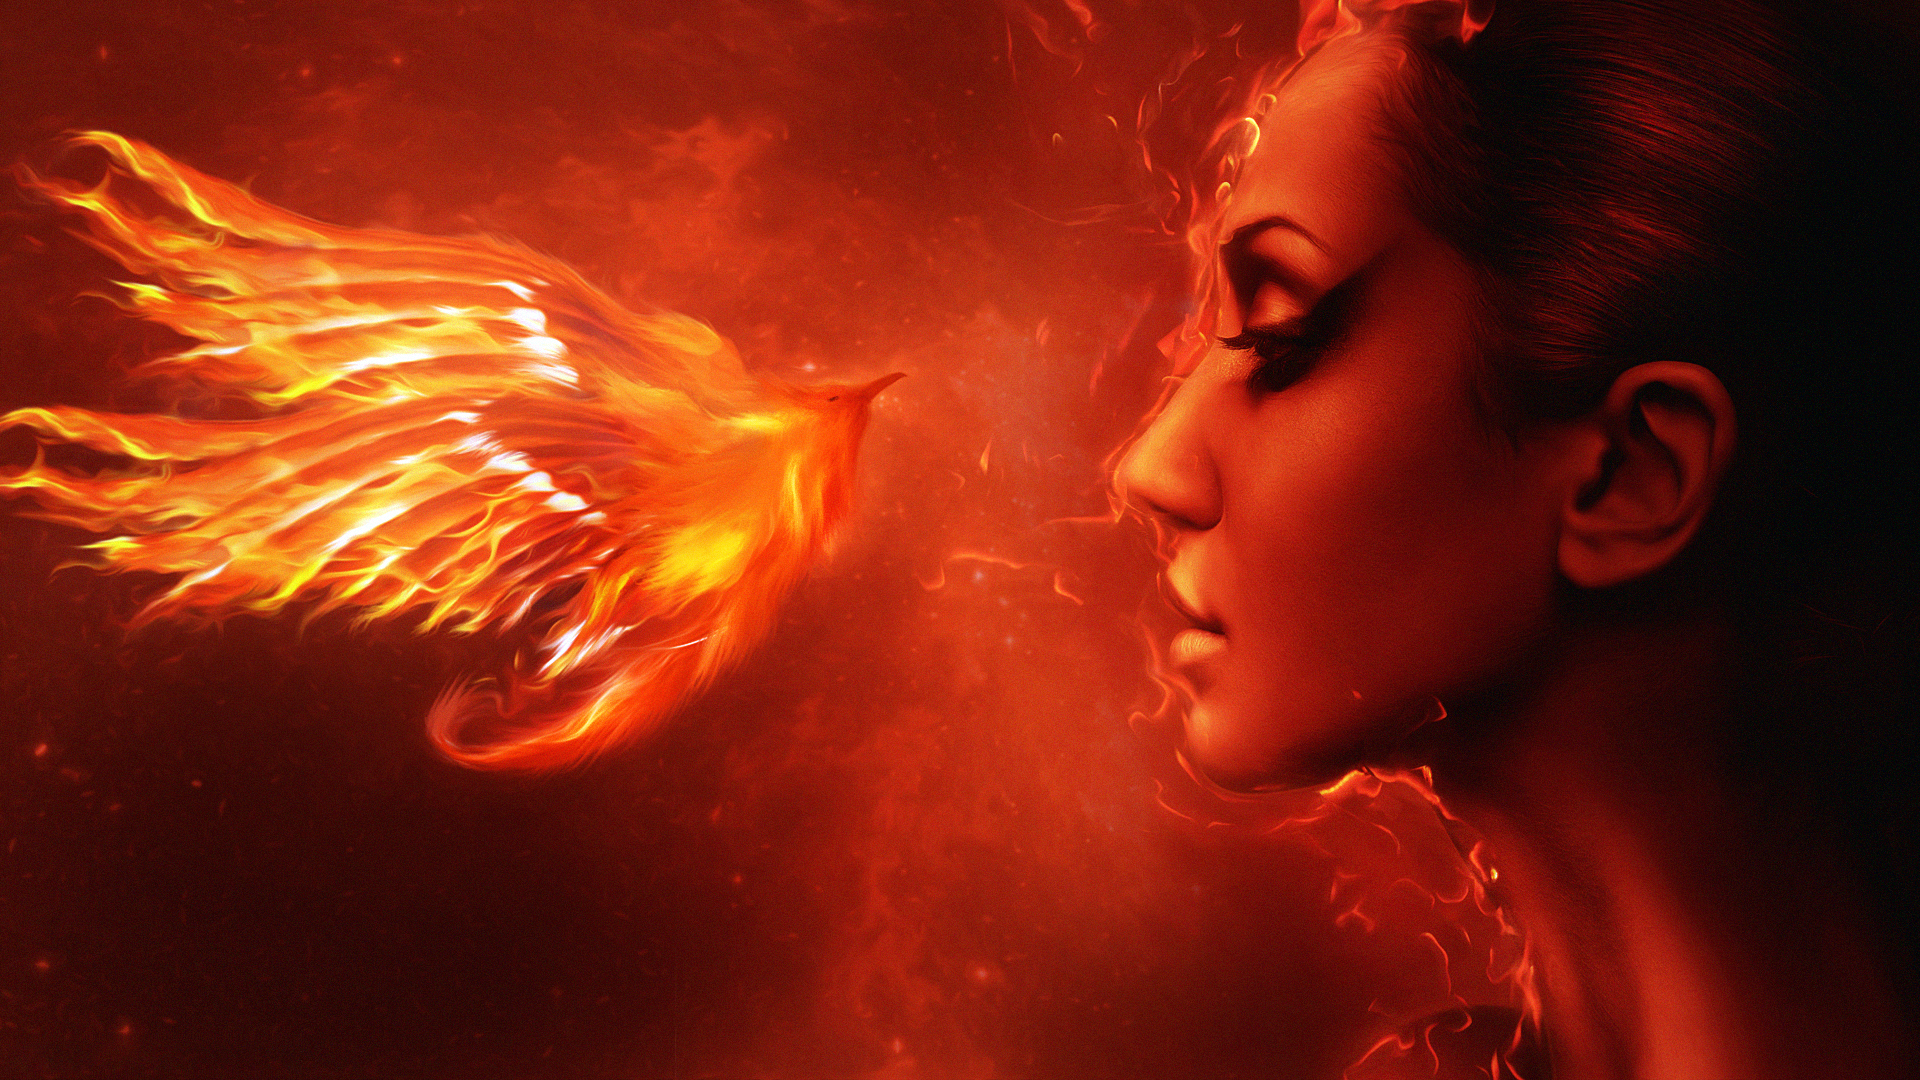 Fantasy Girl and Phoenix by MachiavelliCro